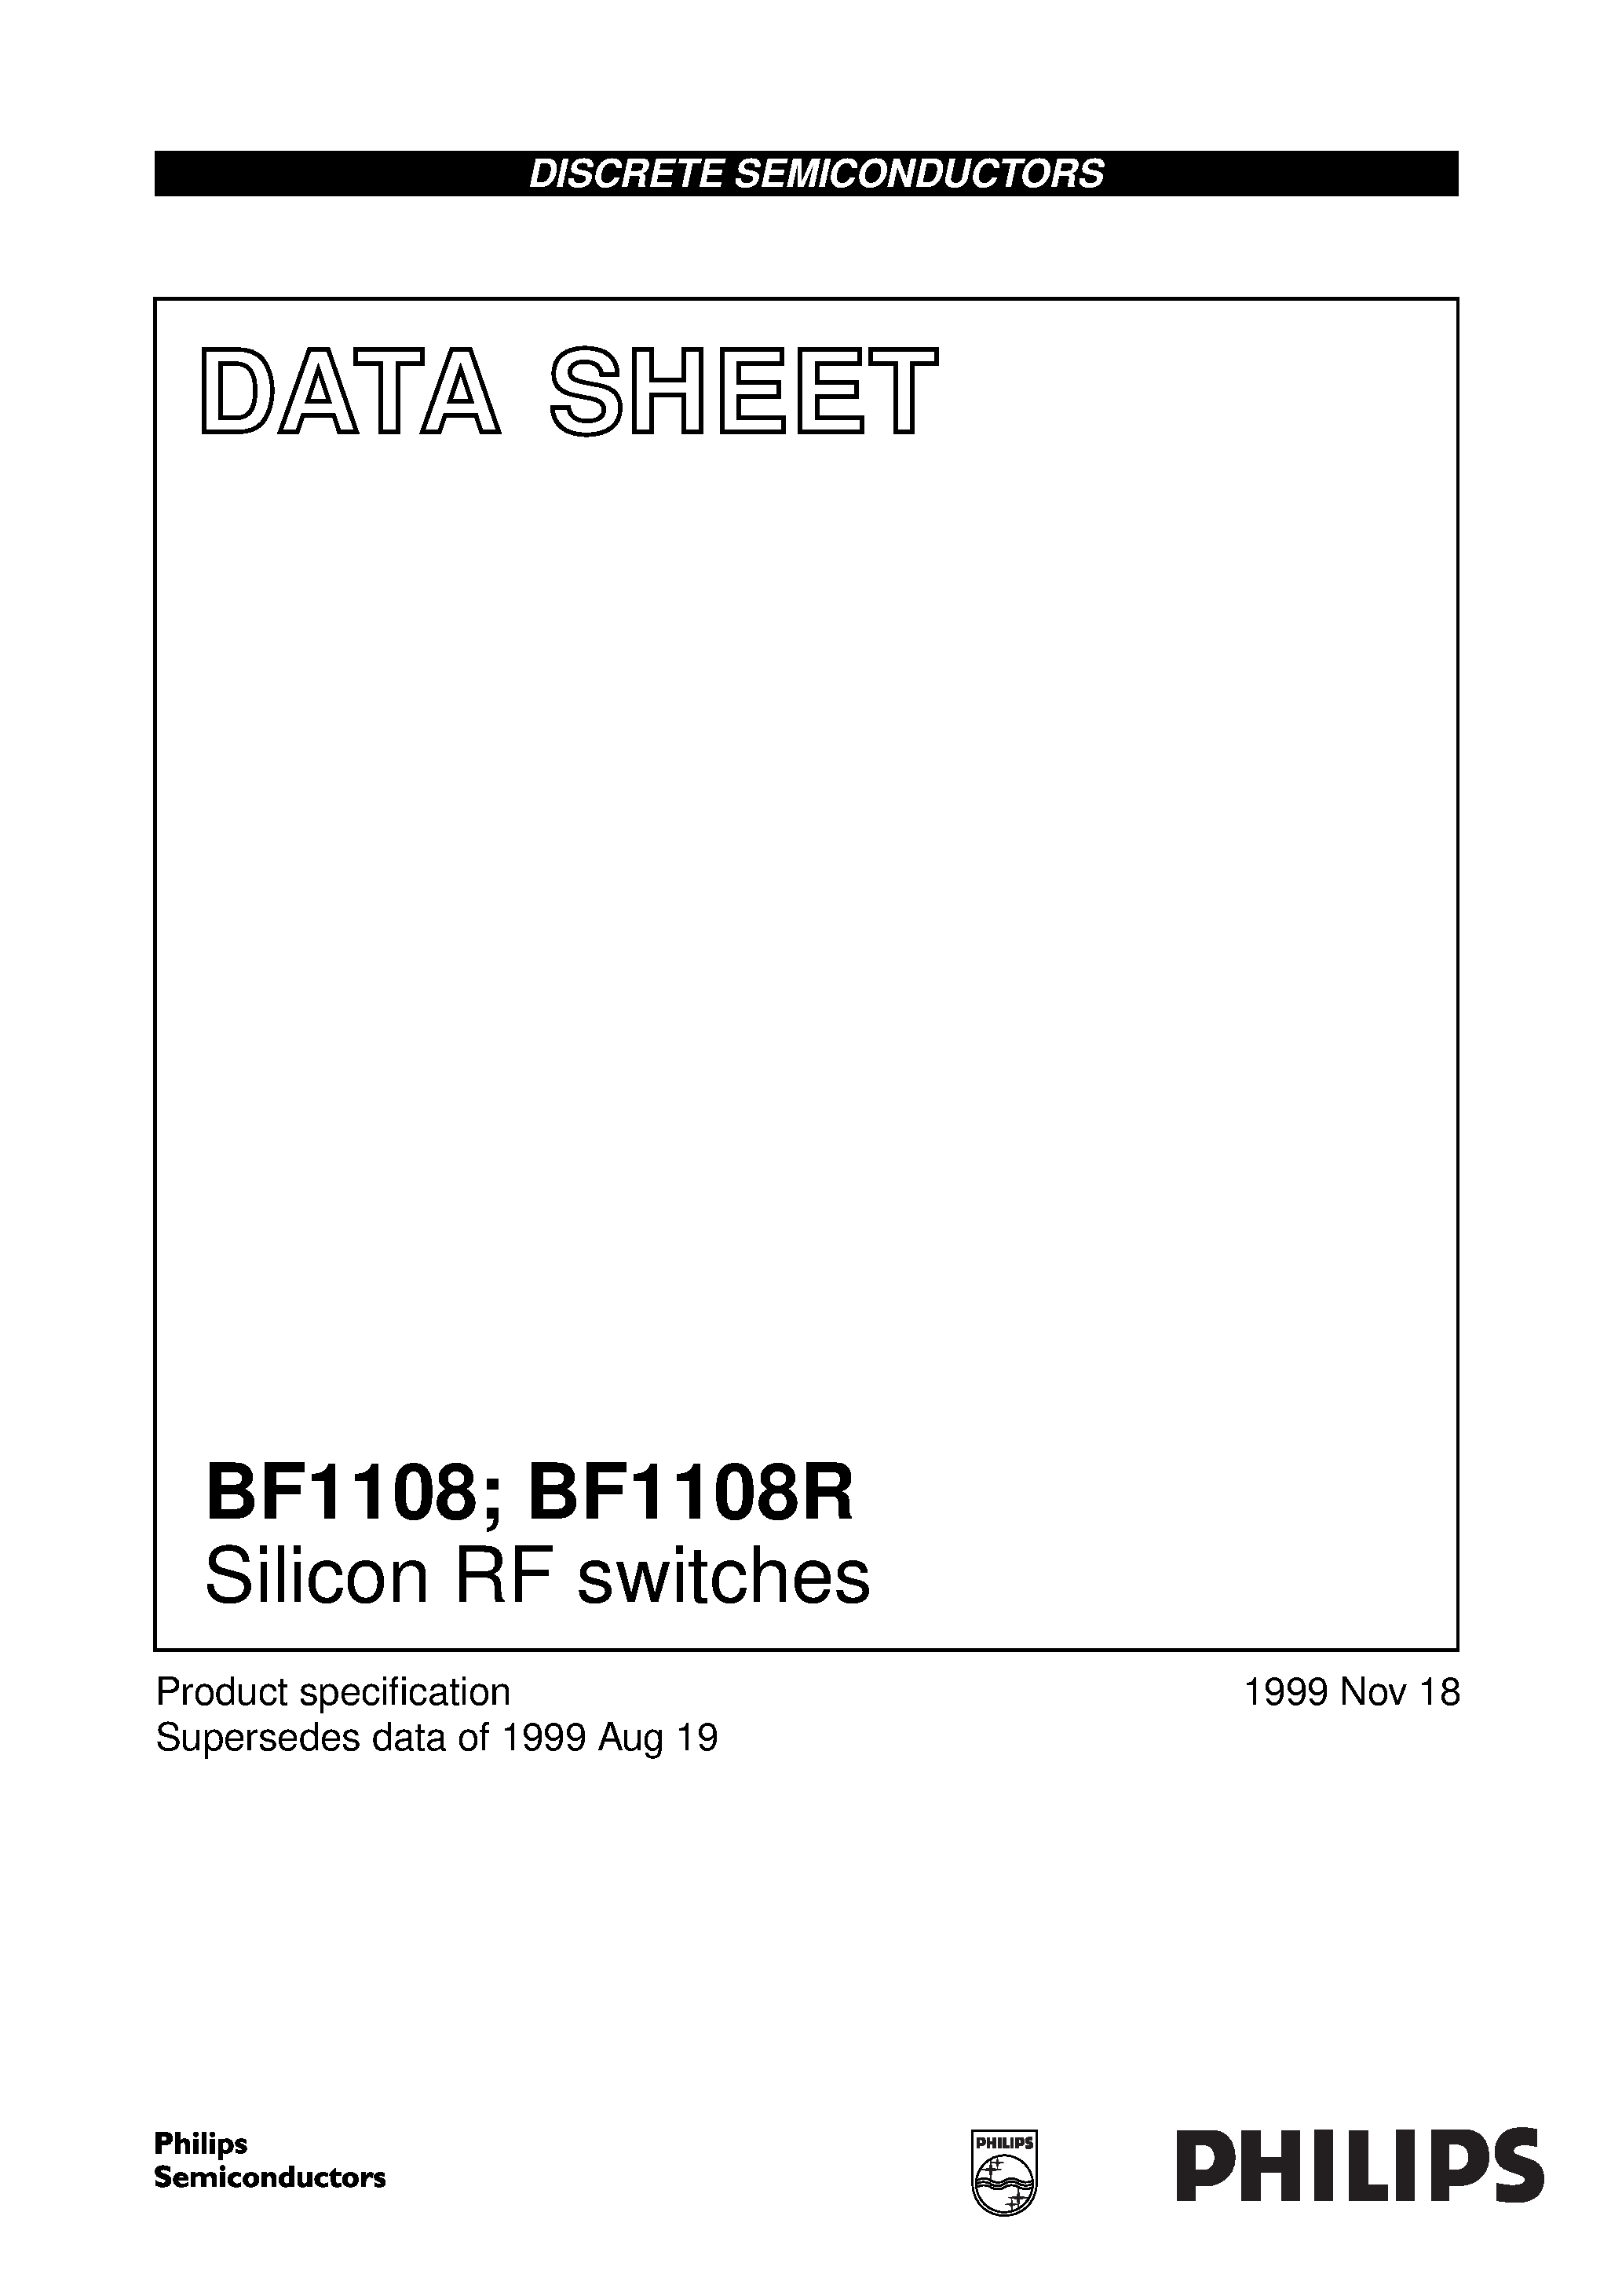 Даташит BF1108 - Silicon RF switches страница 1